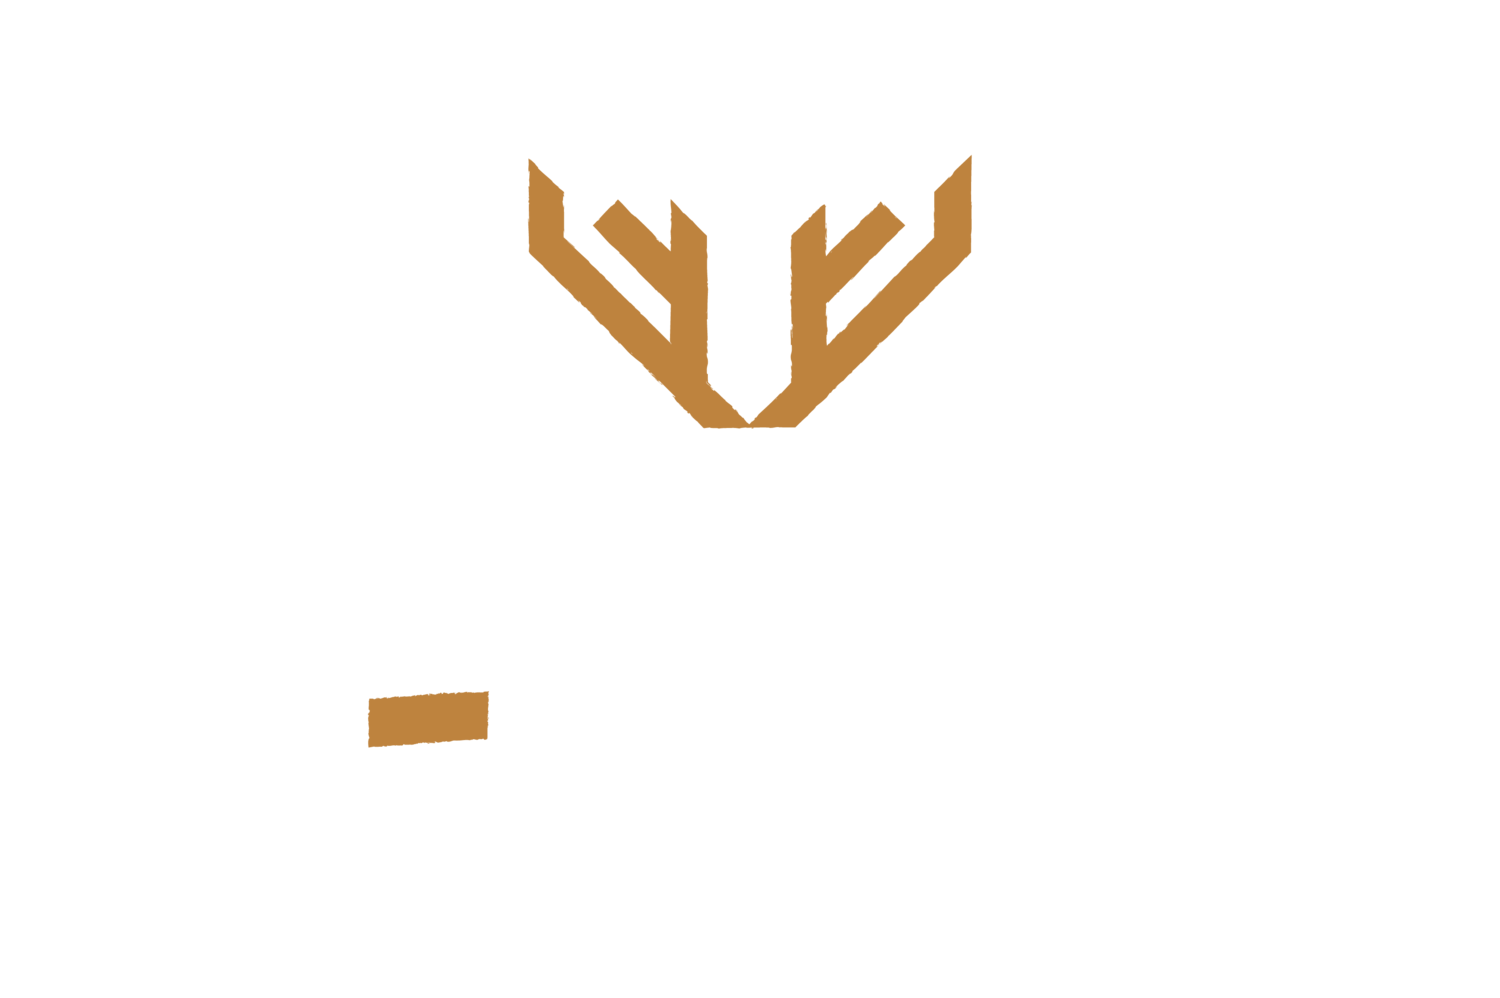 PJ's Cabin Store